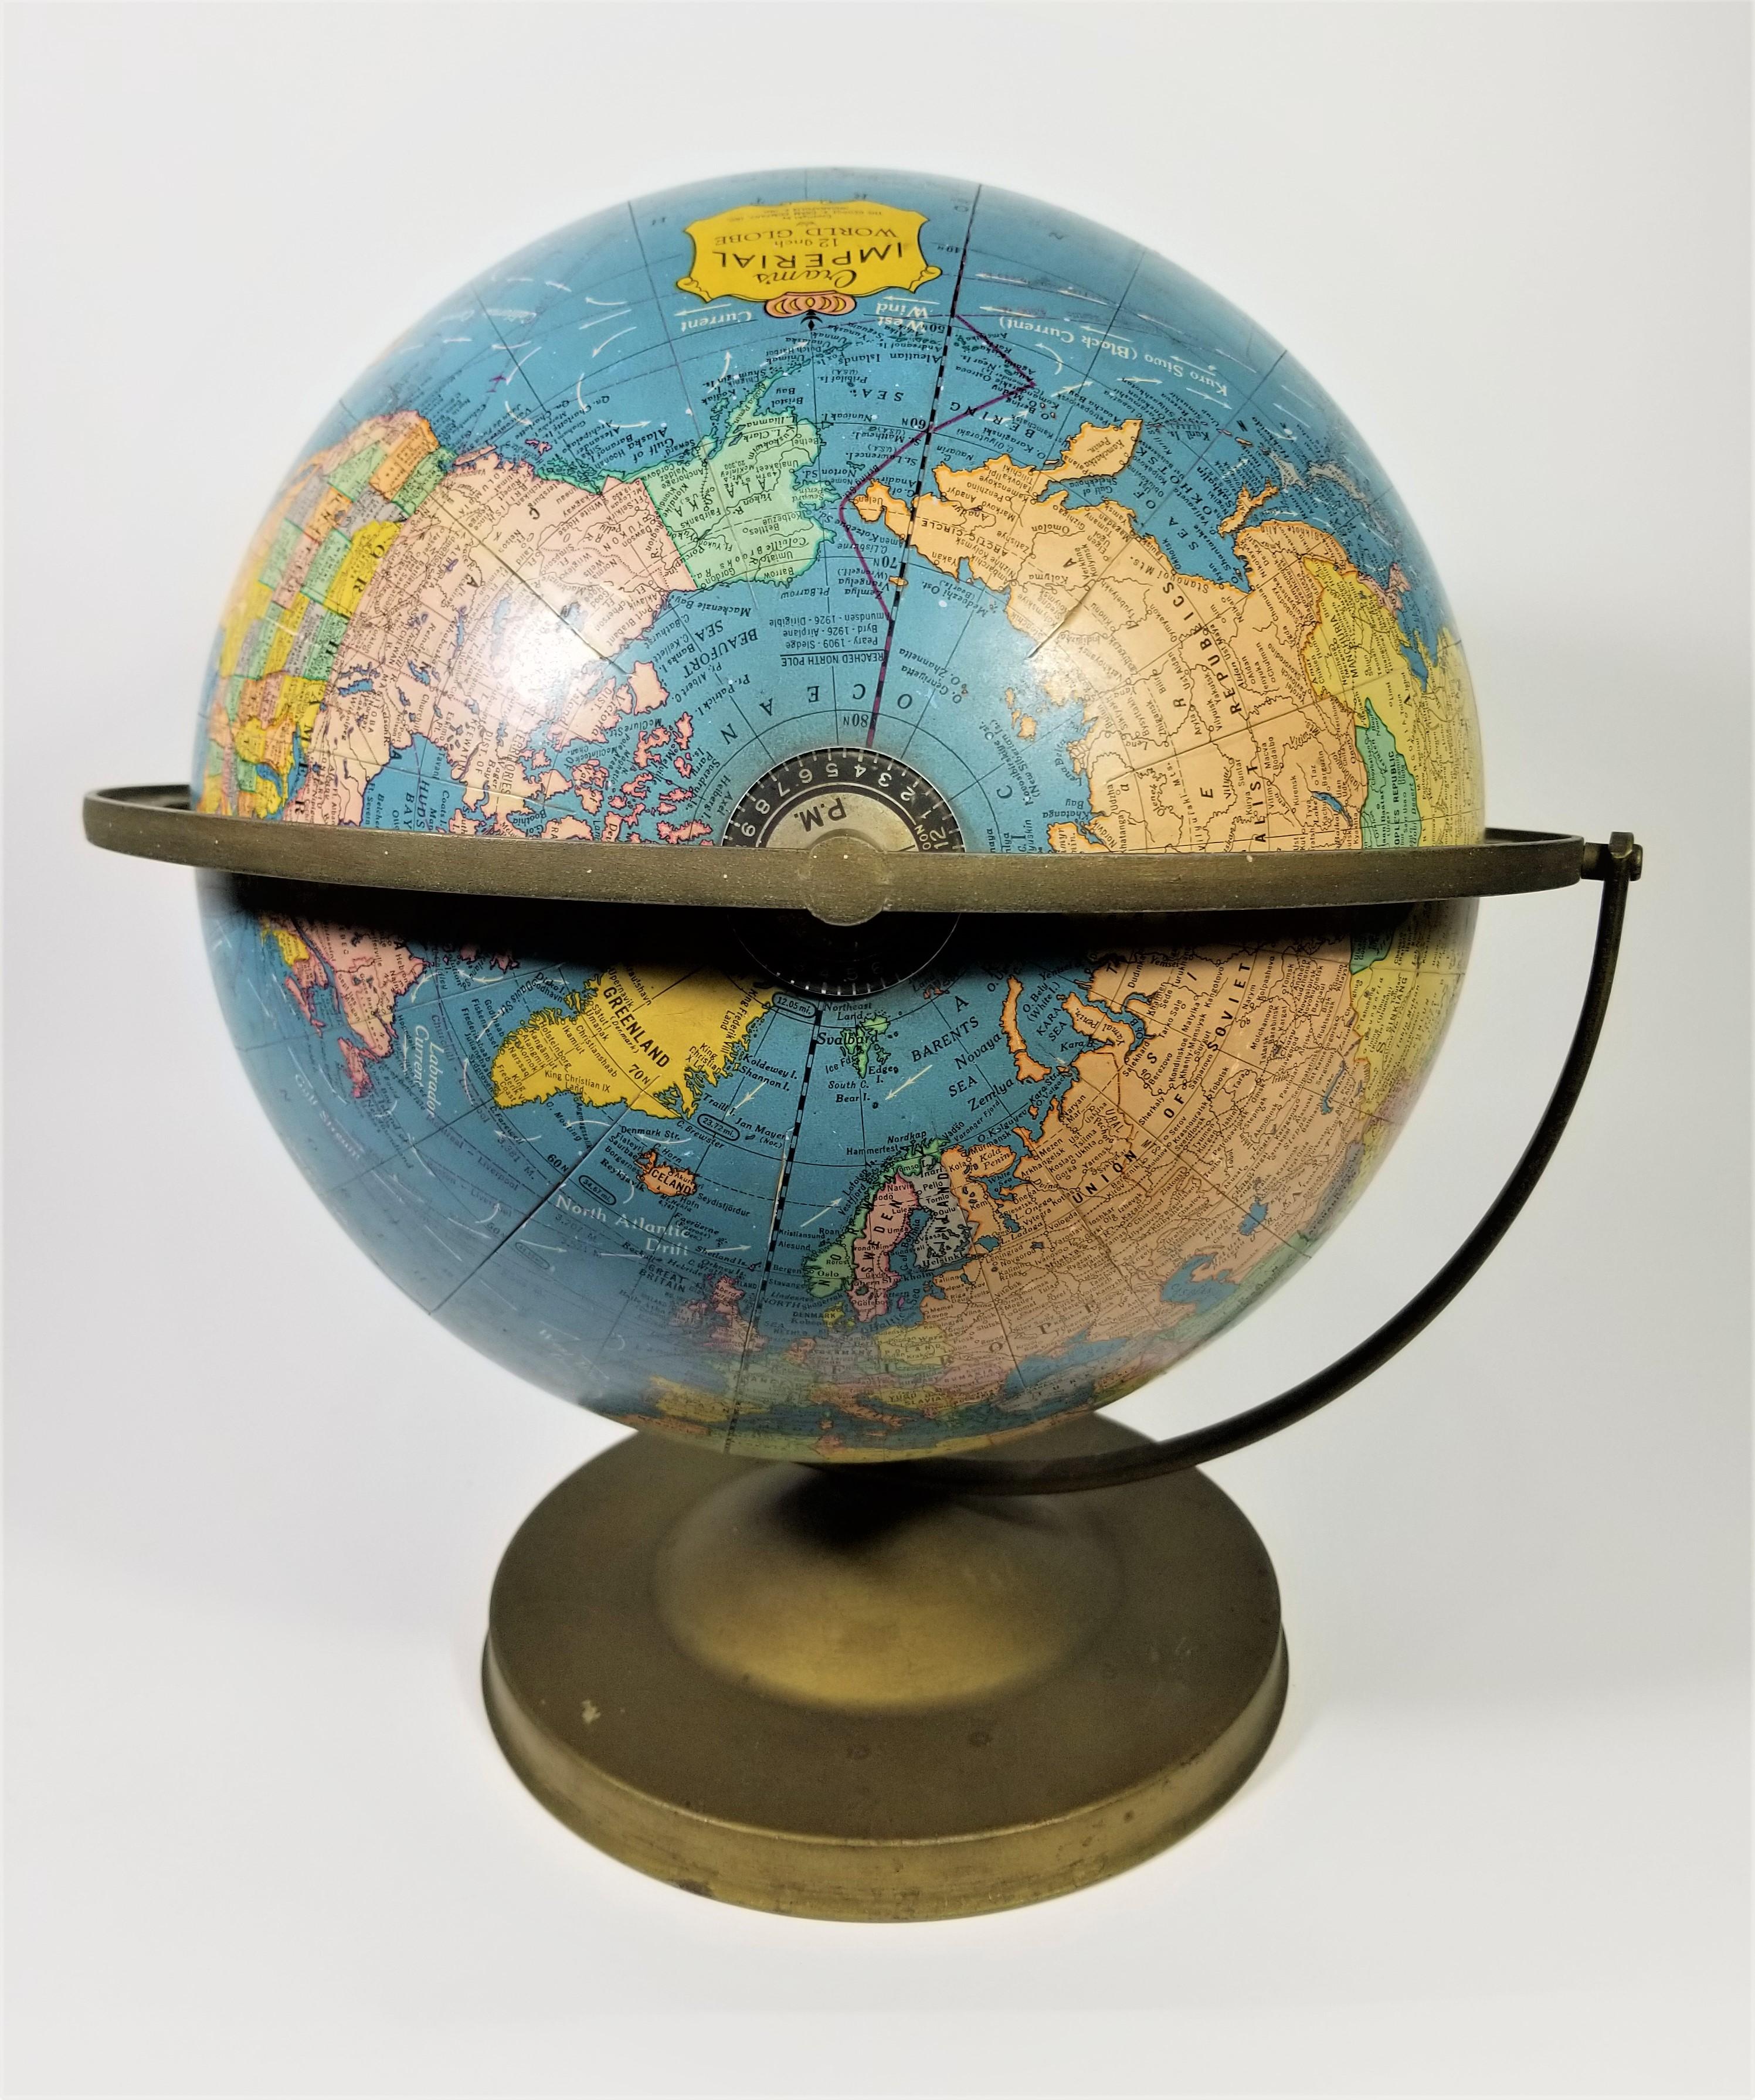 cram's imperial 12 inch world globe